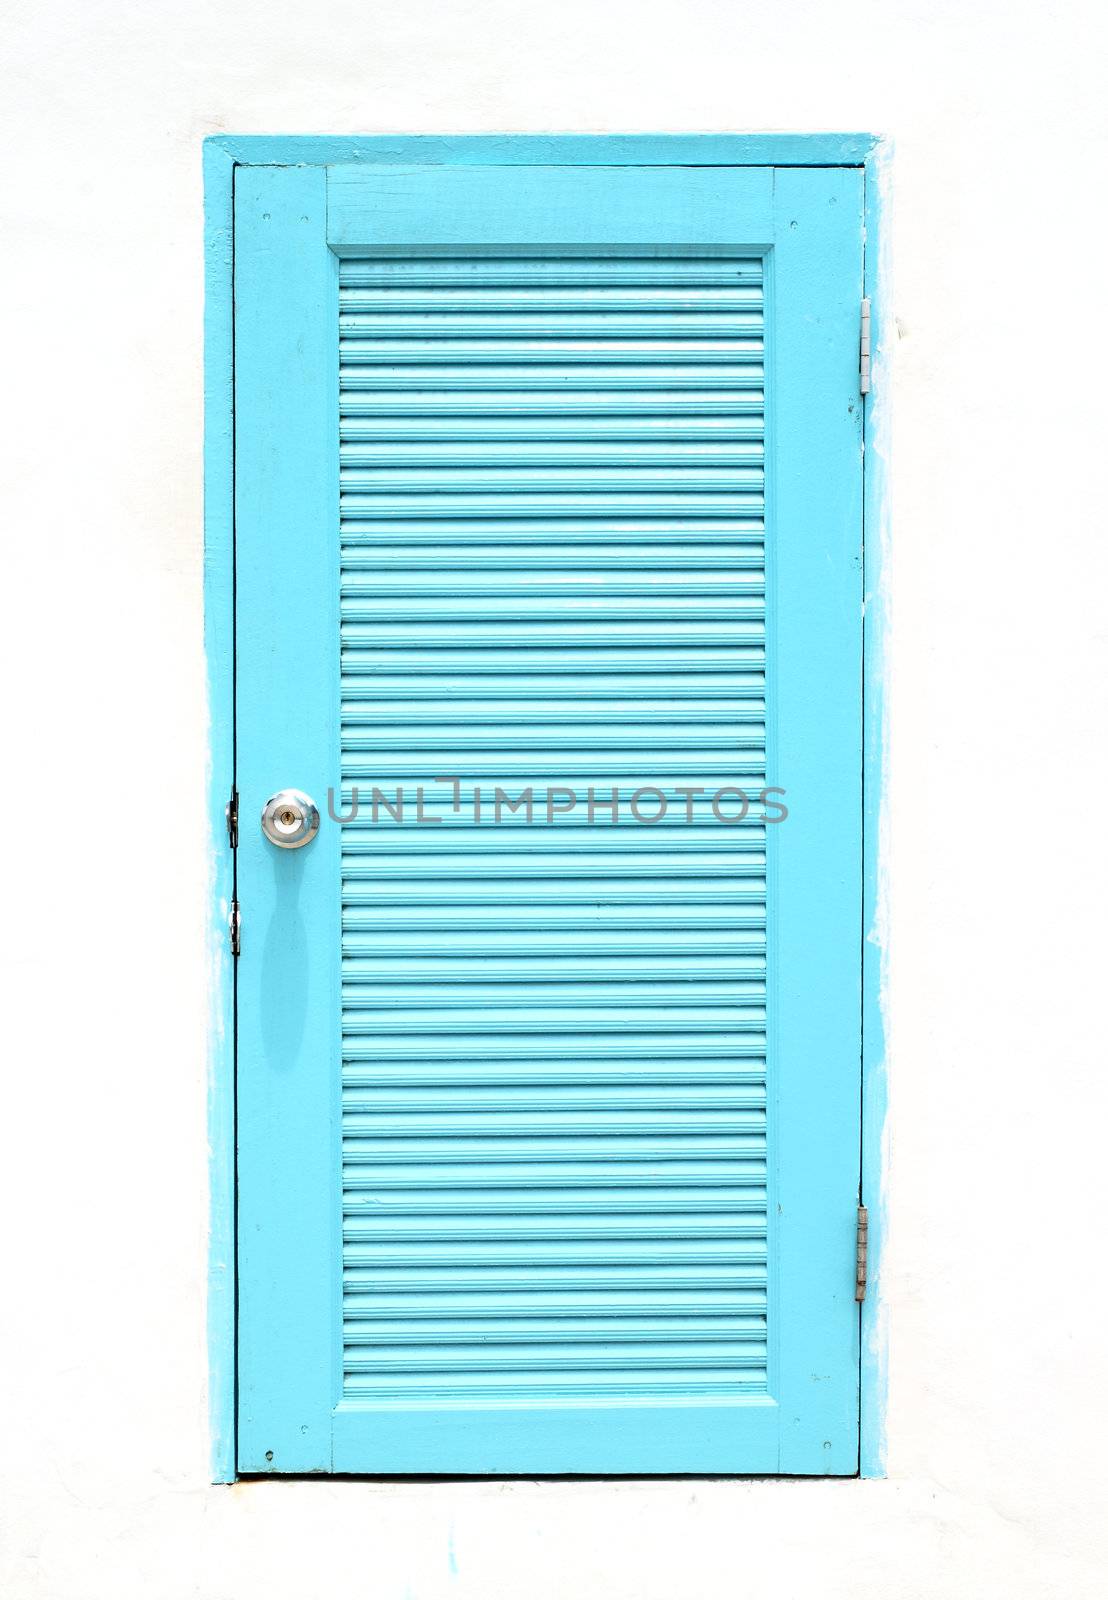 Greek Style door on wall